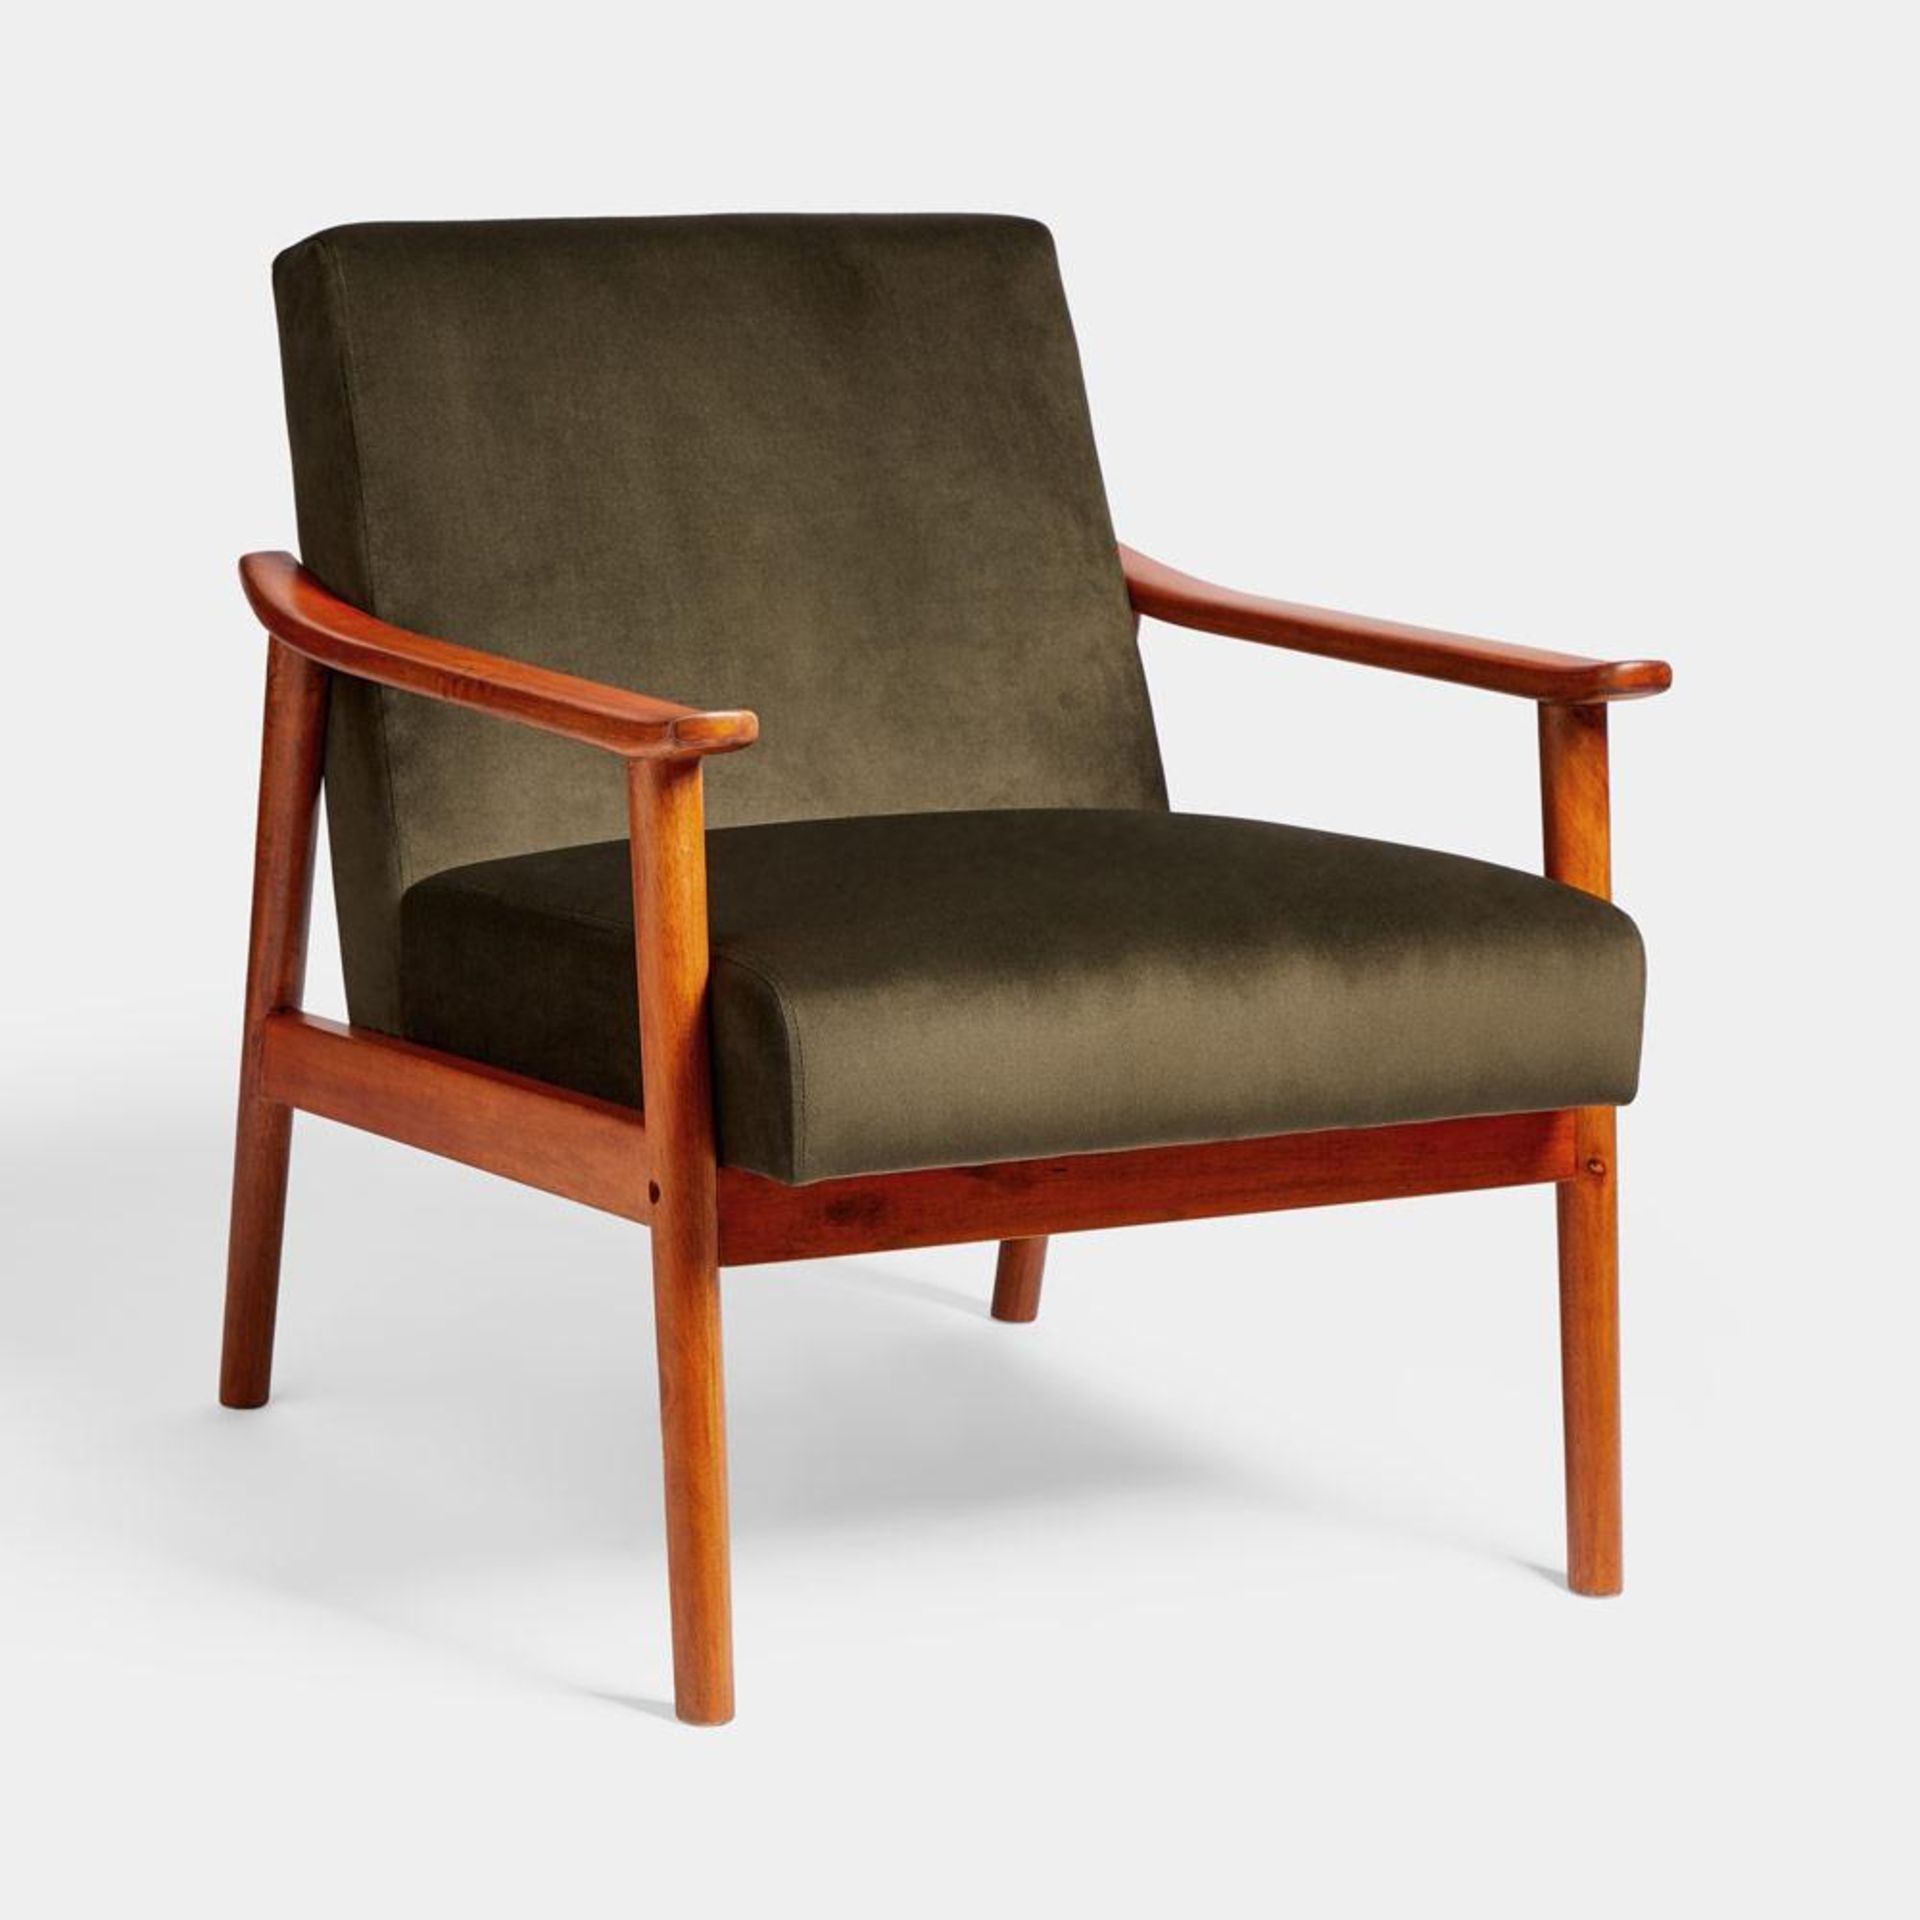 Fairfield Frame Lounge Chair - PW. Fairfield Frame Lounge ChairIntroduce elegant mid-century